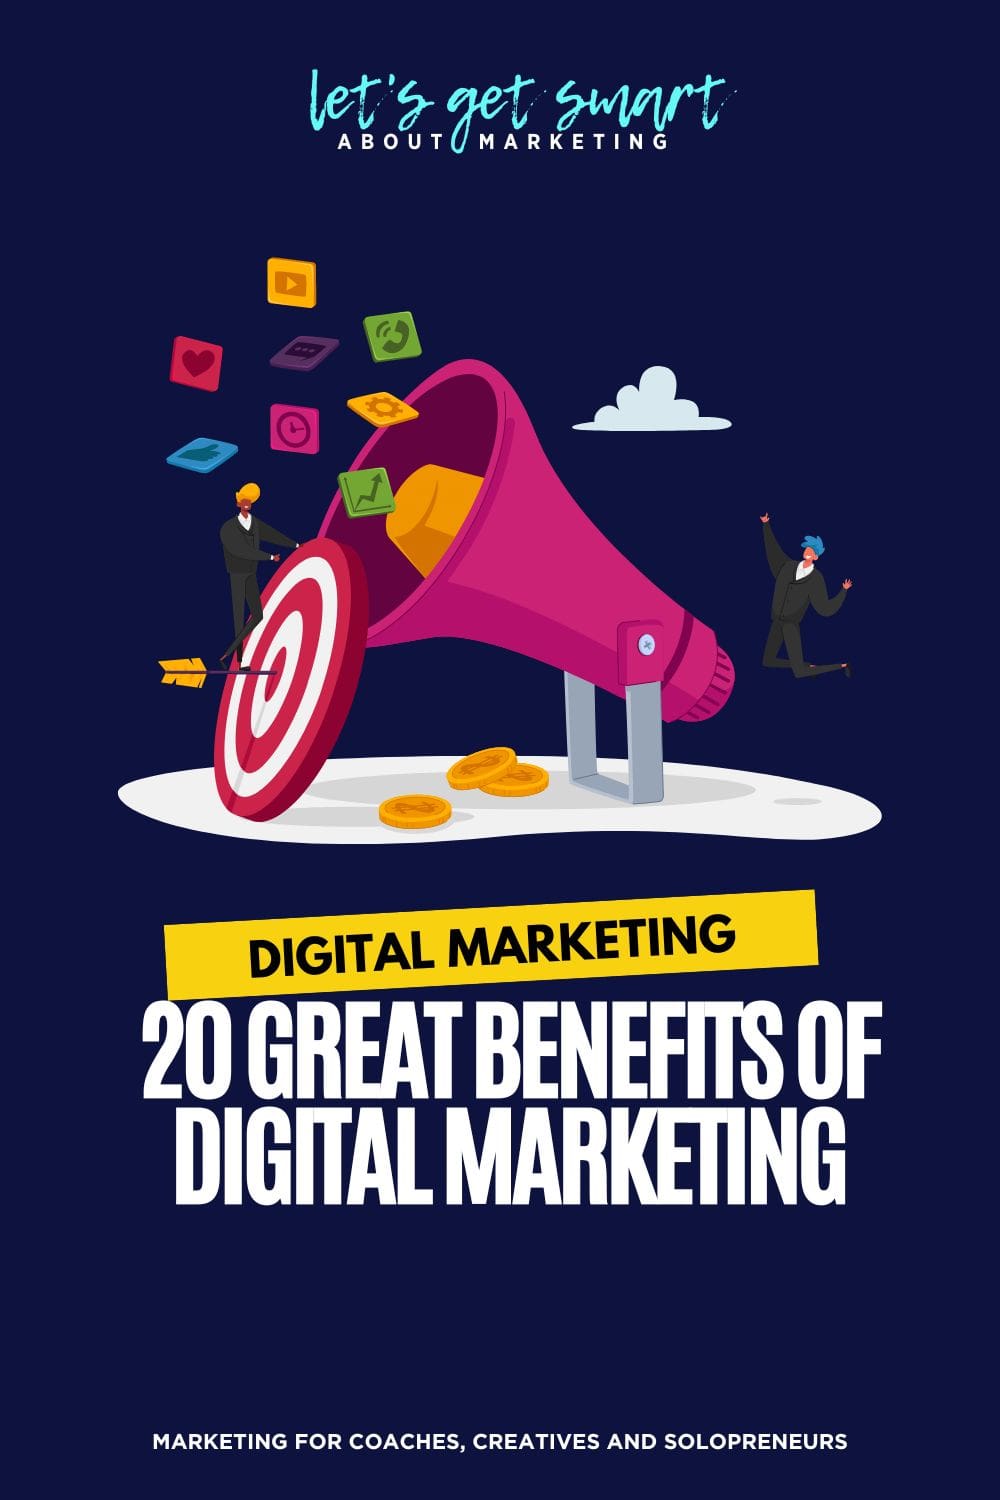 20 Great Benefits of Digital Marketing